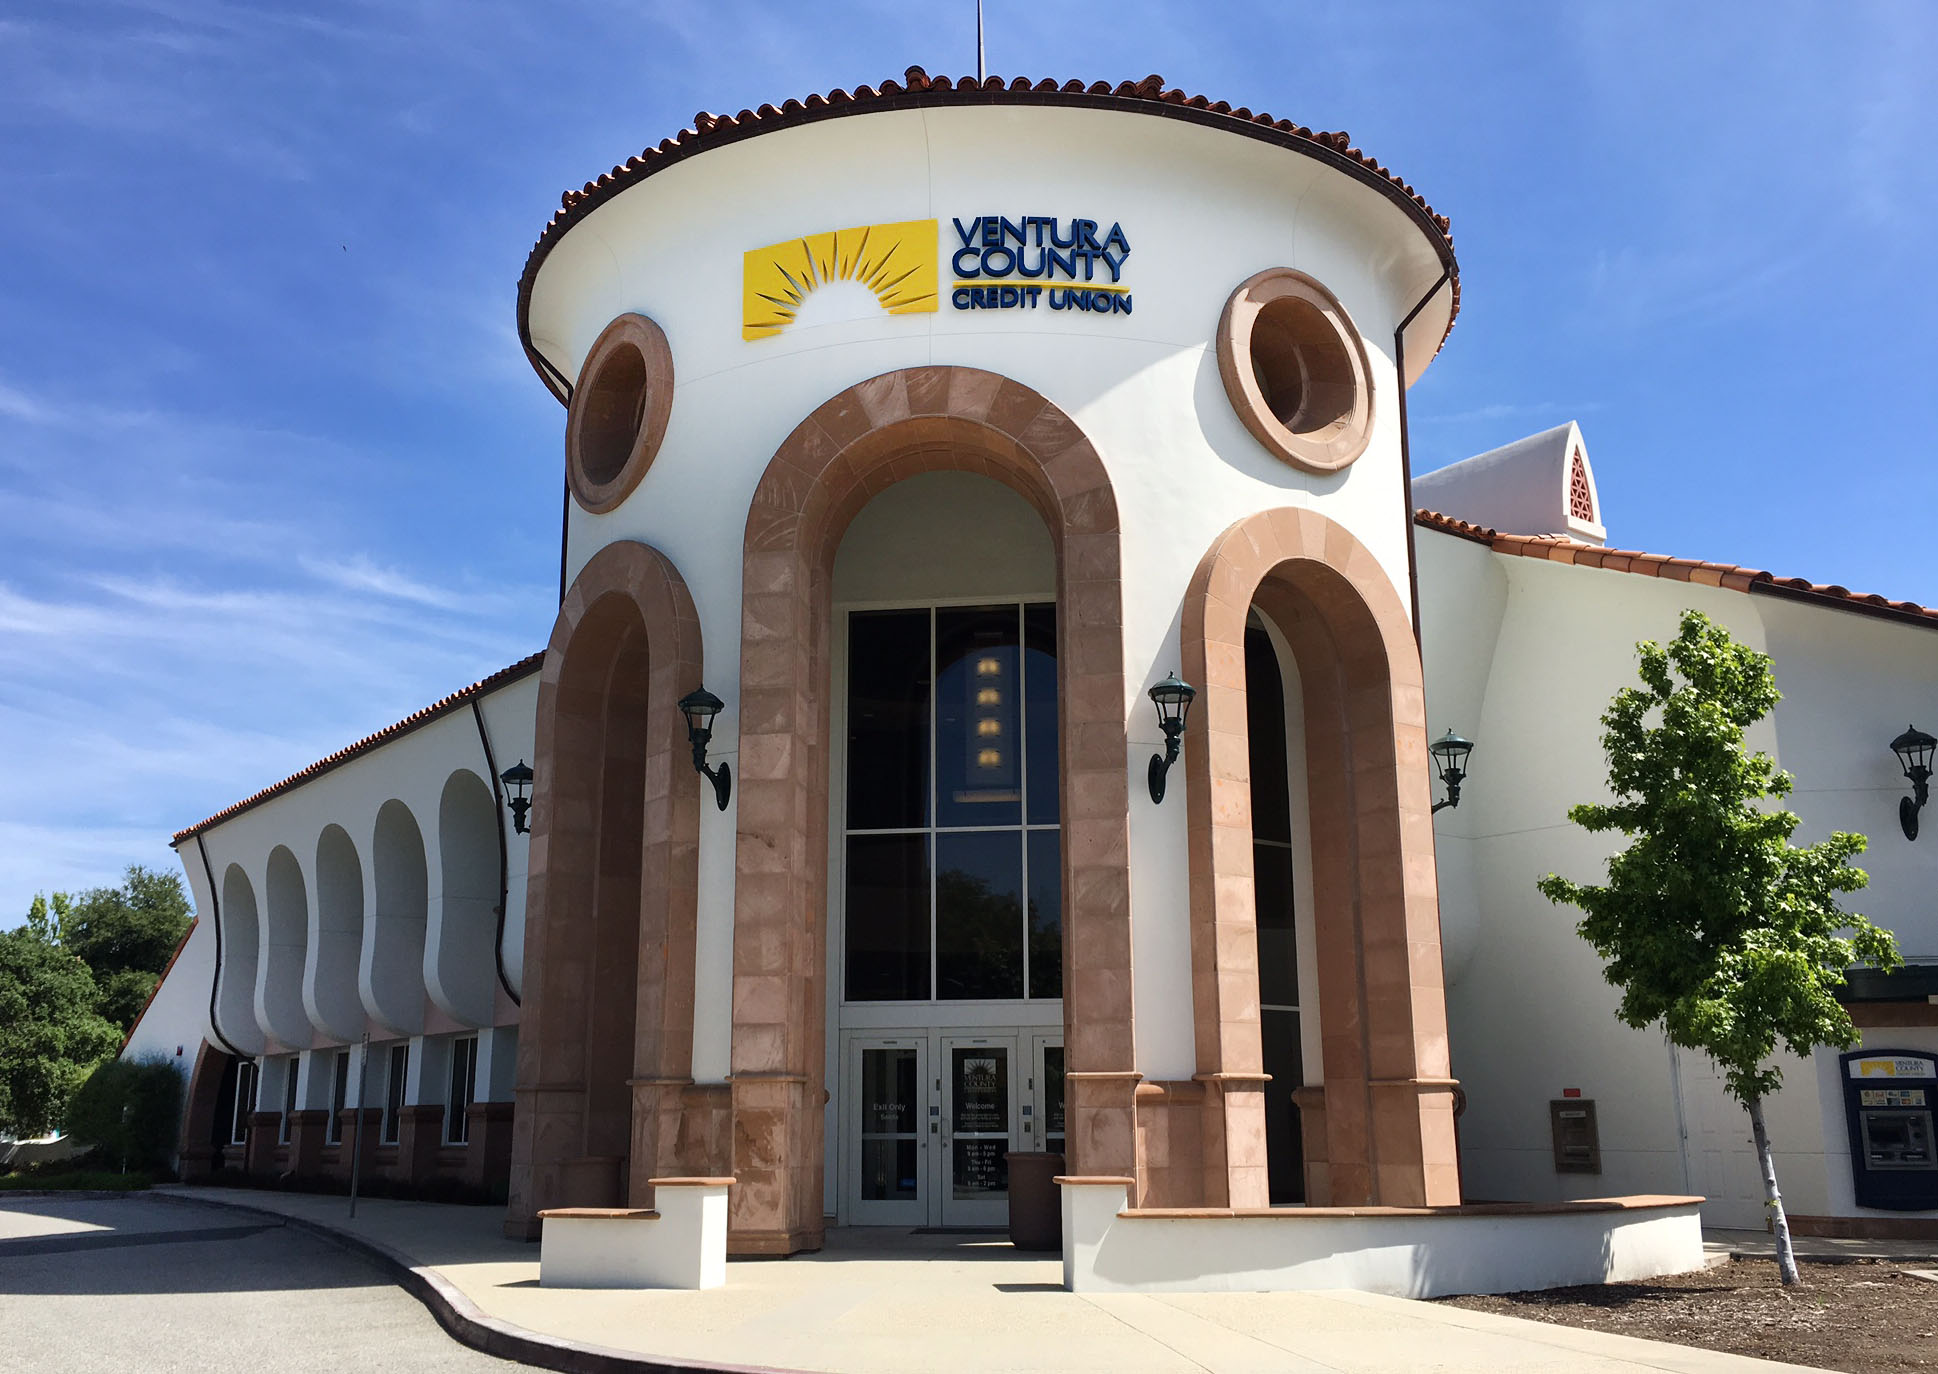 Ventura County Credit Union - Thousand Oaks